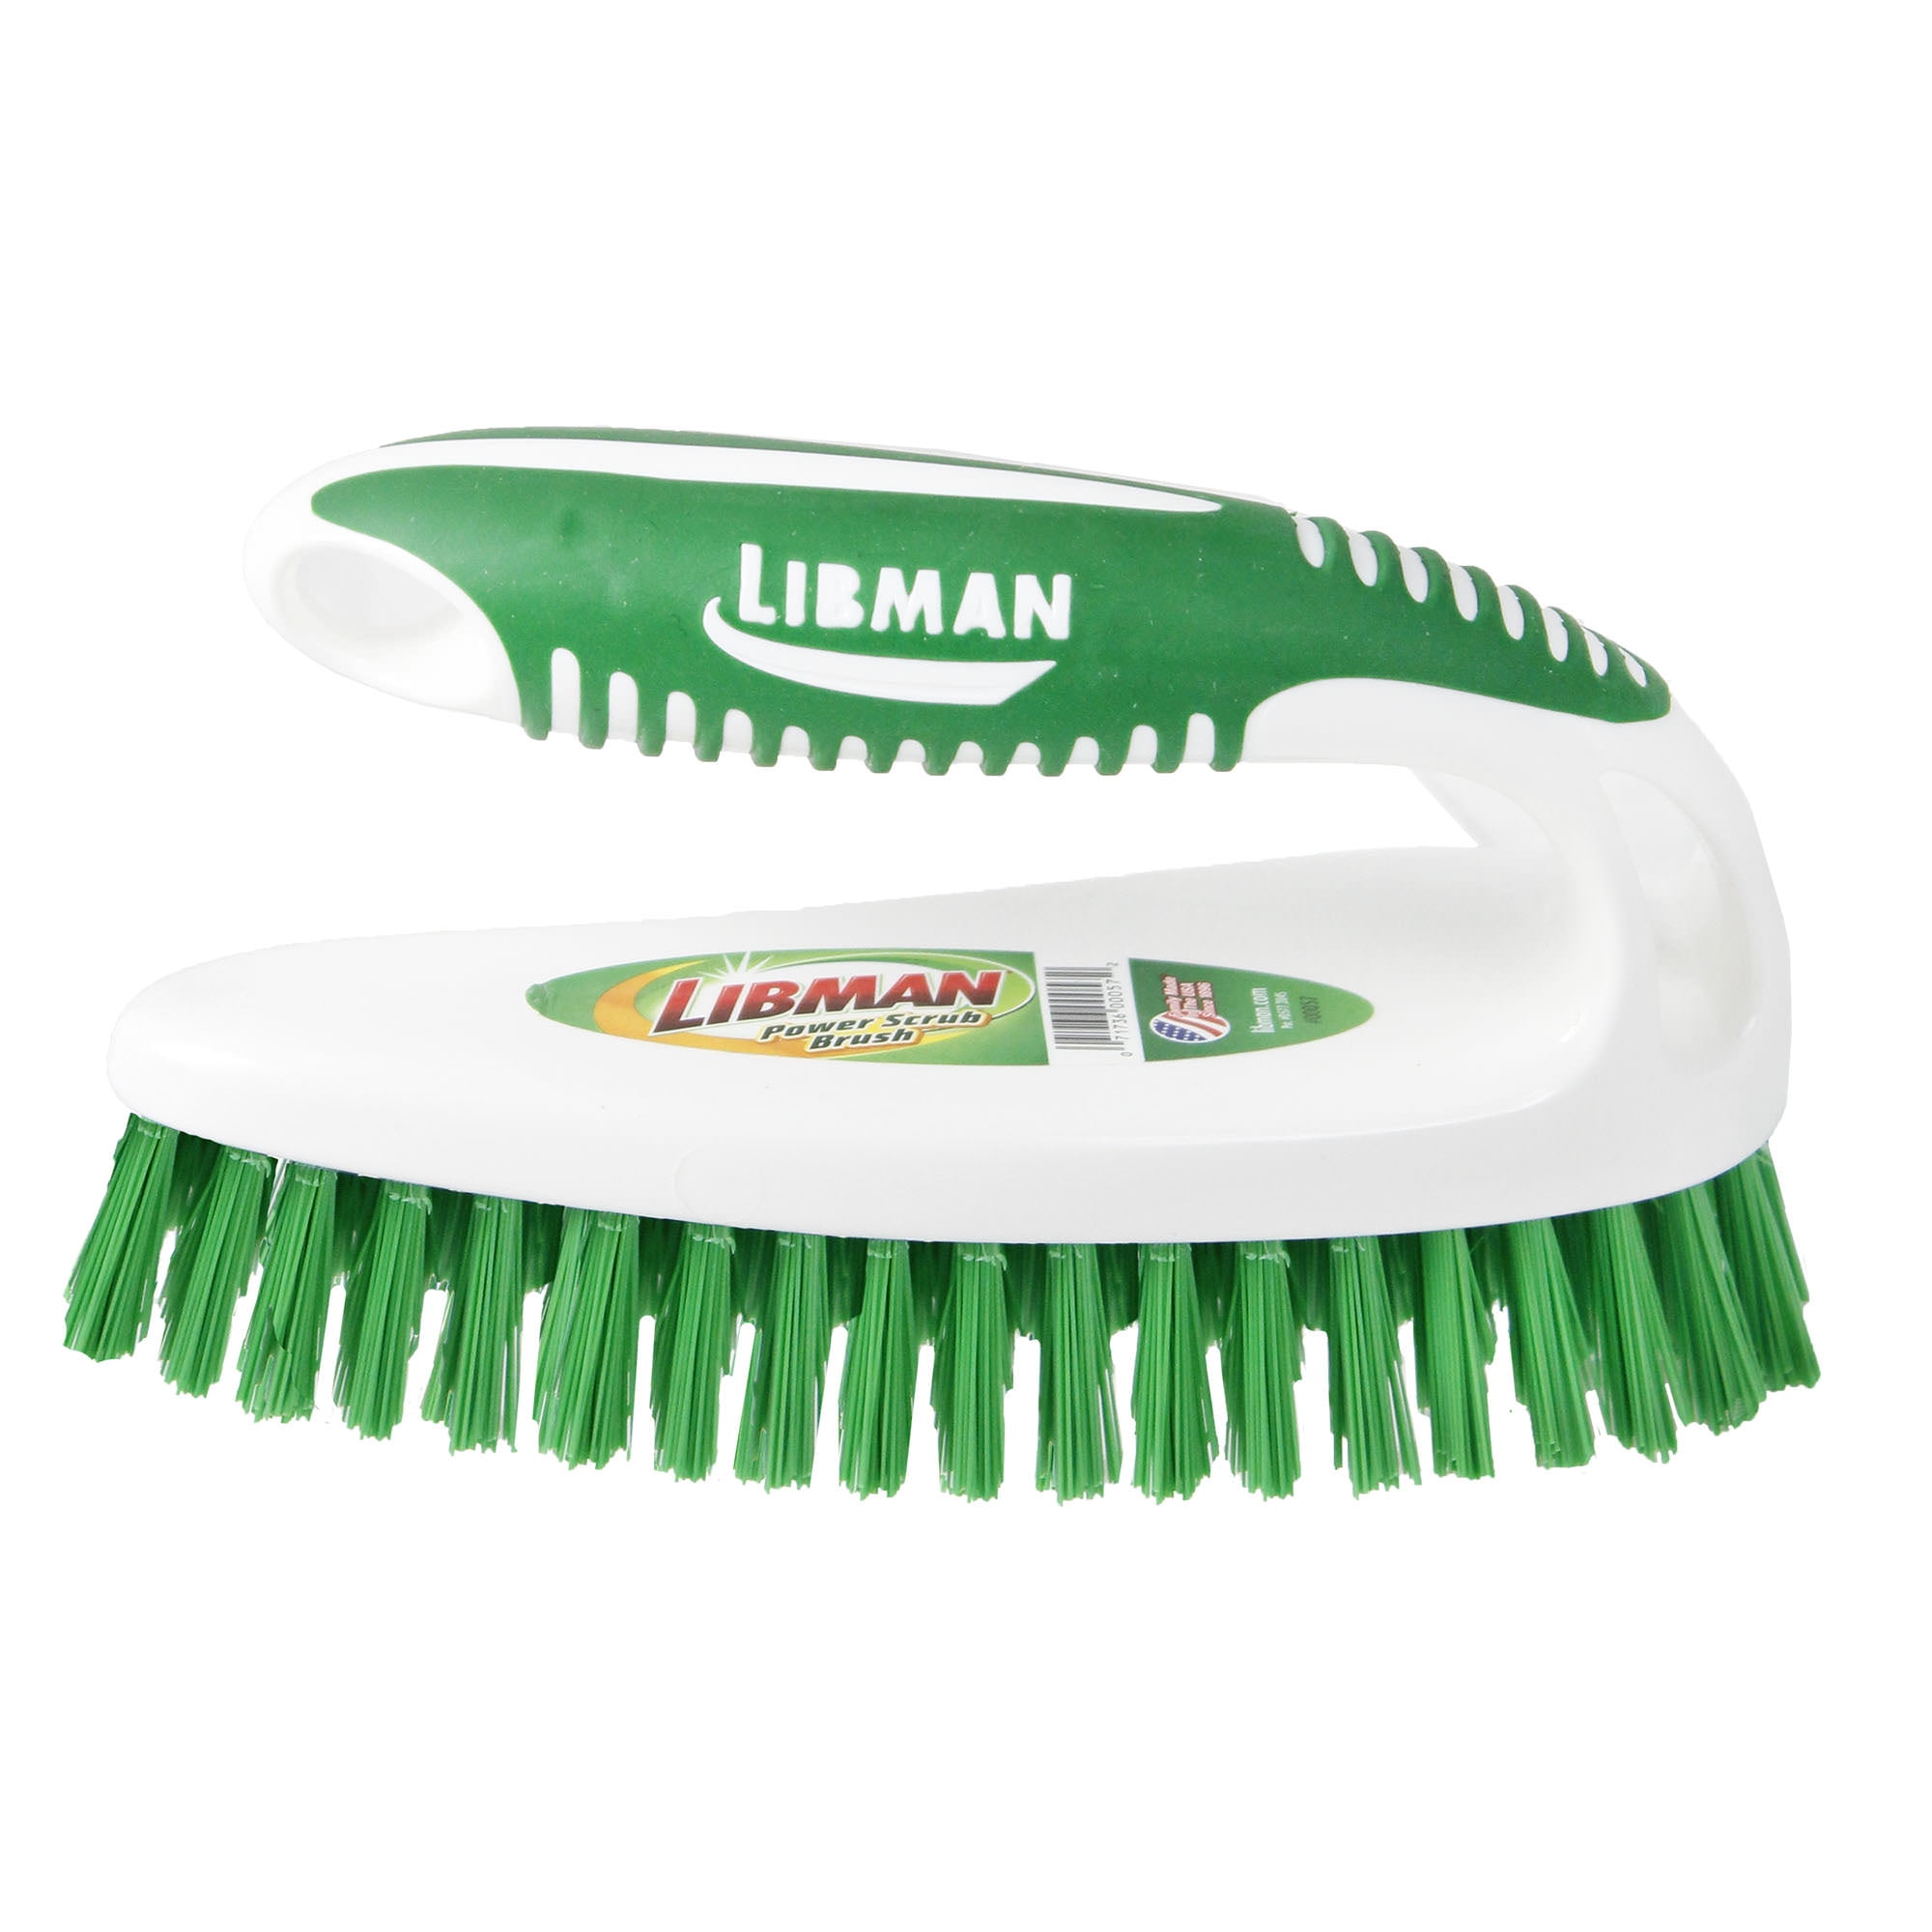 Libman® Power Scrub Brush, 1 ct - Harris Teeter